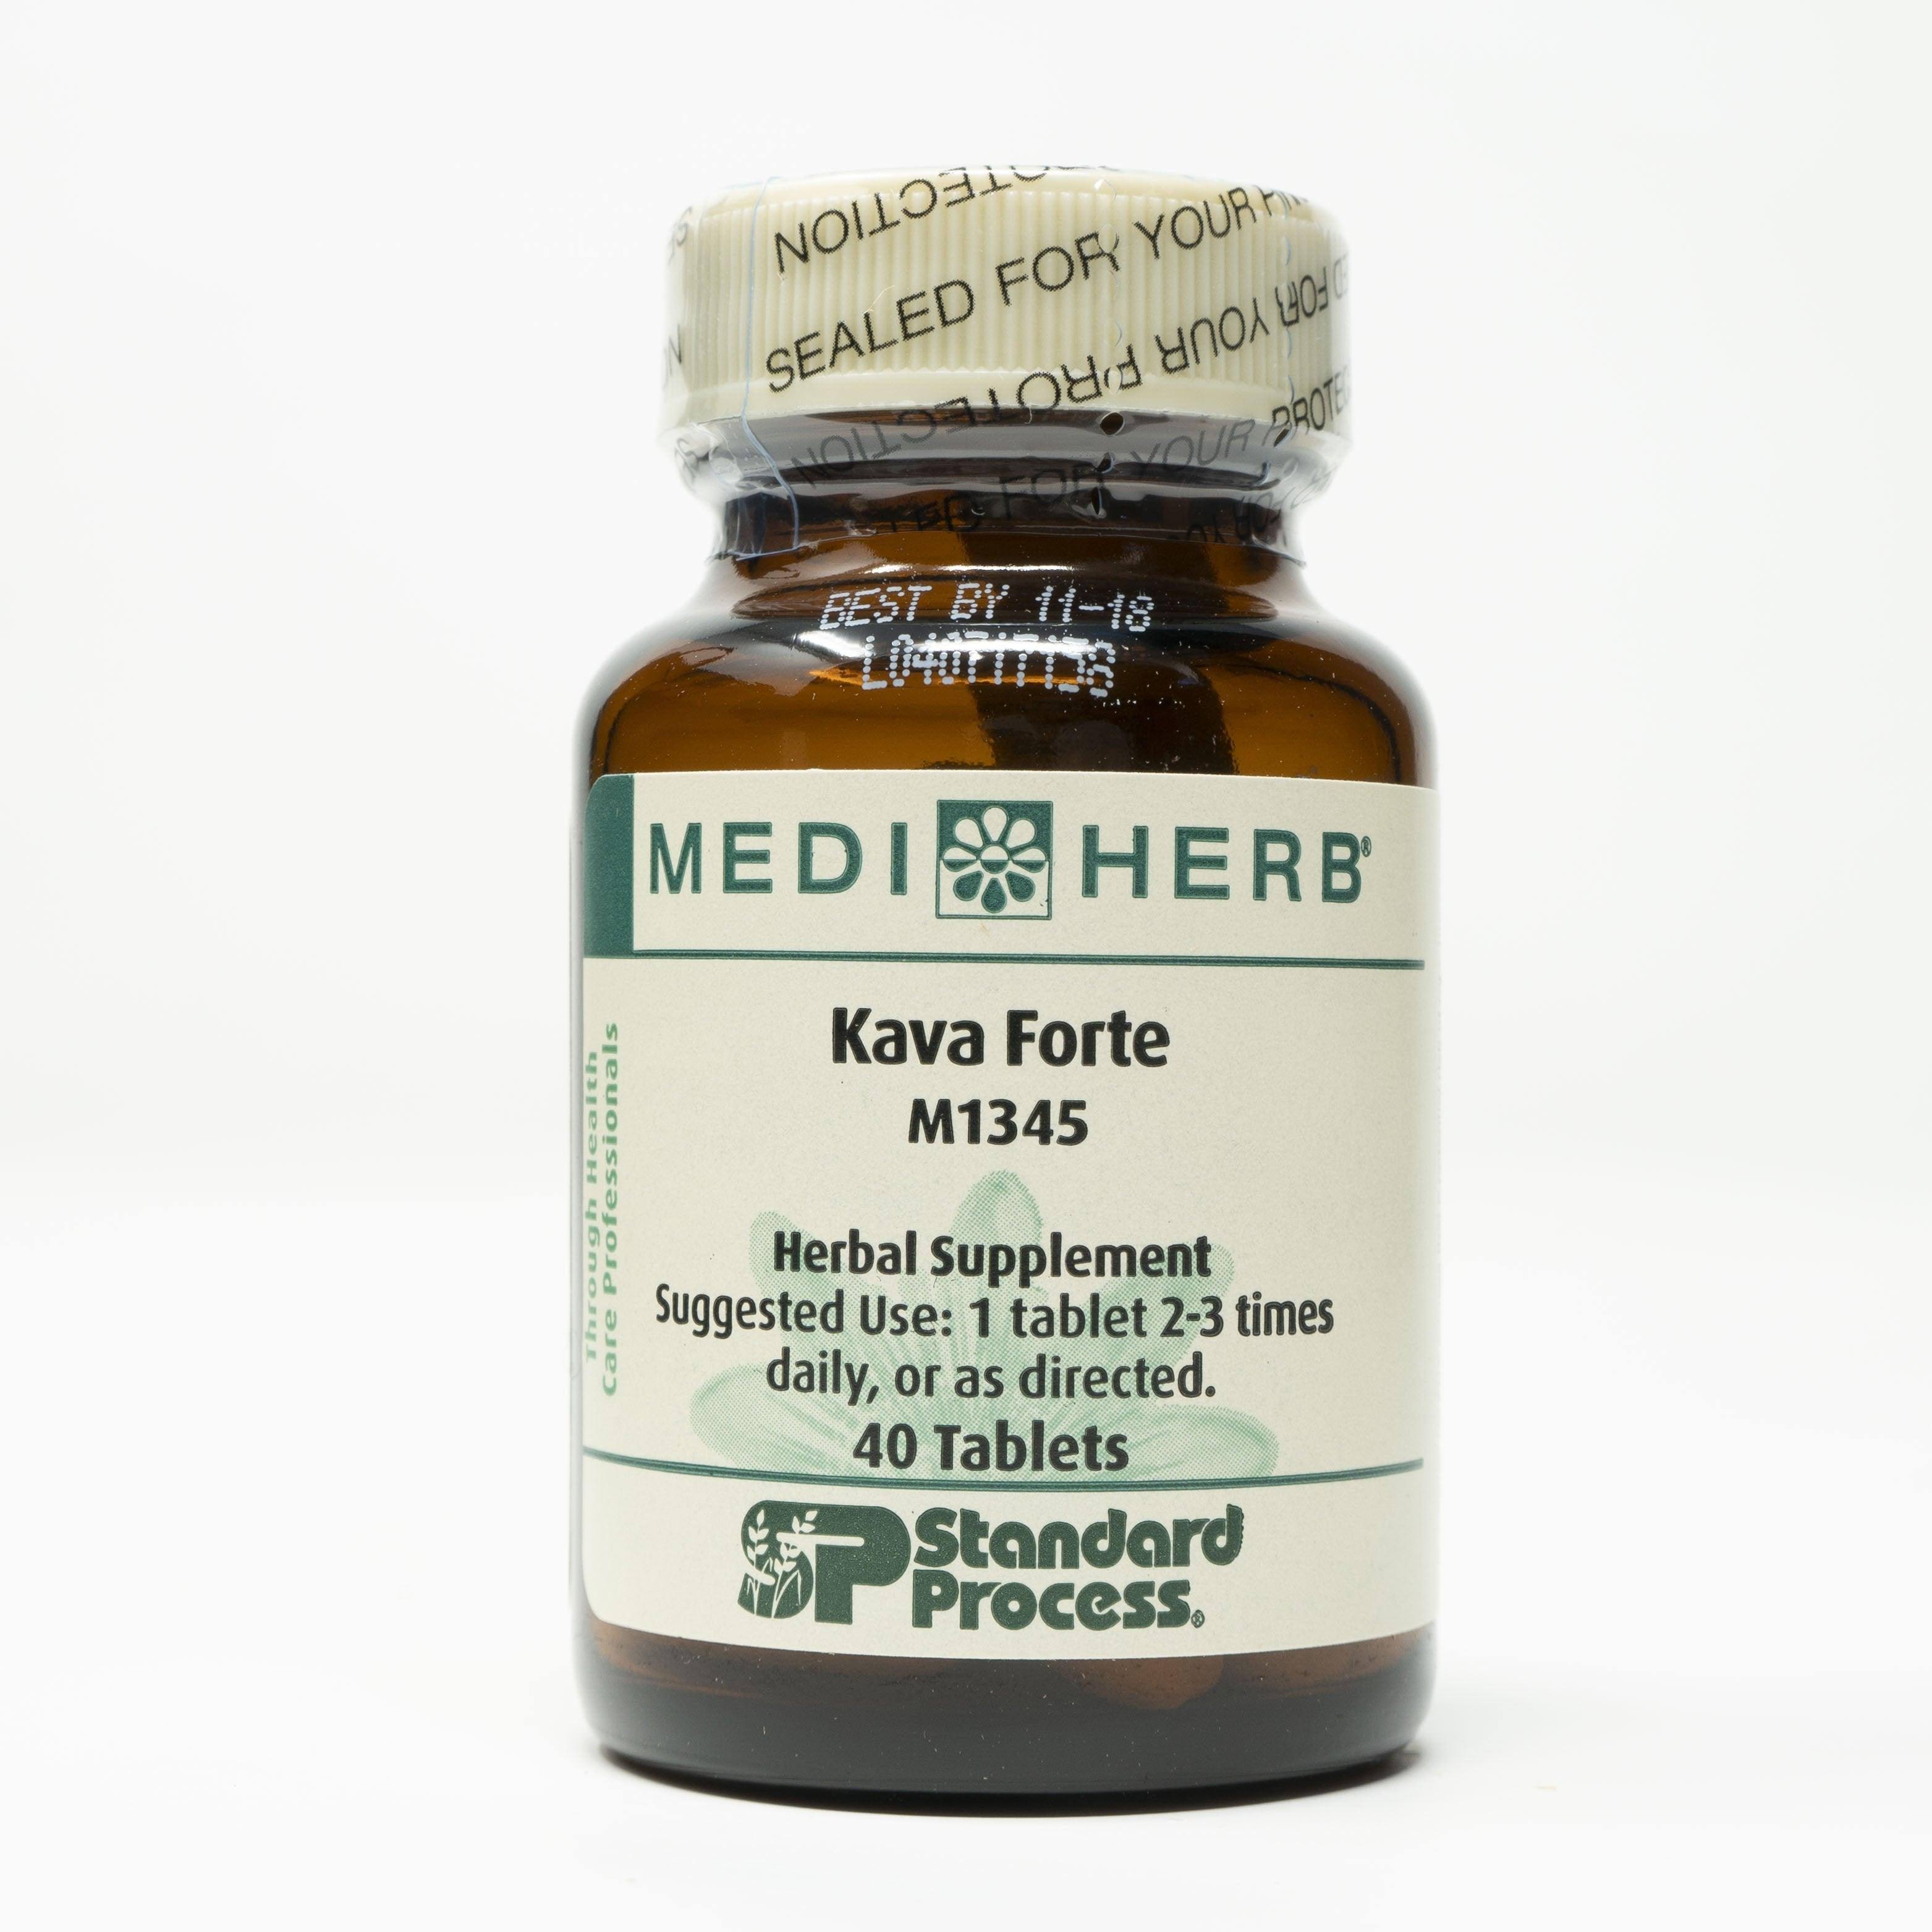 Mediherb Kava Forte Herbal Supplement - 40ct